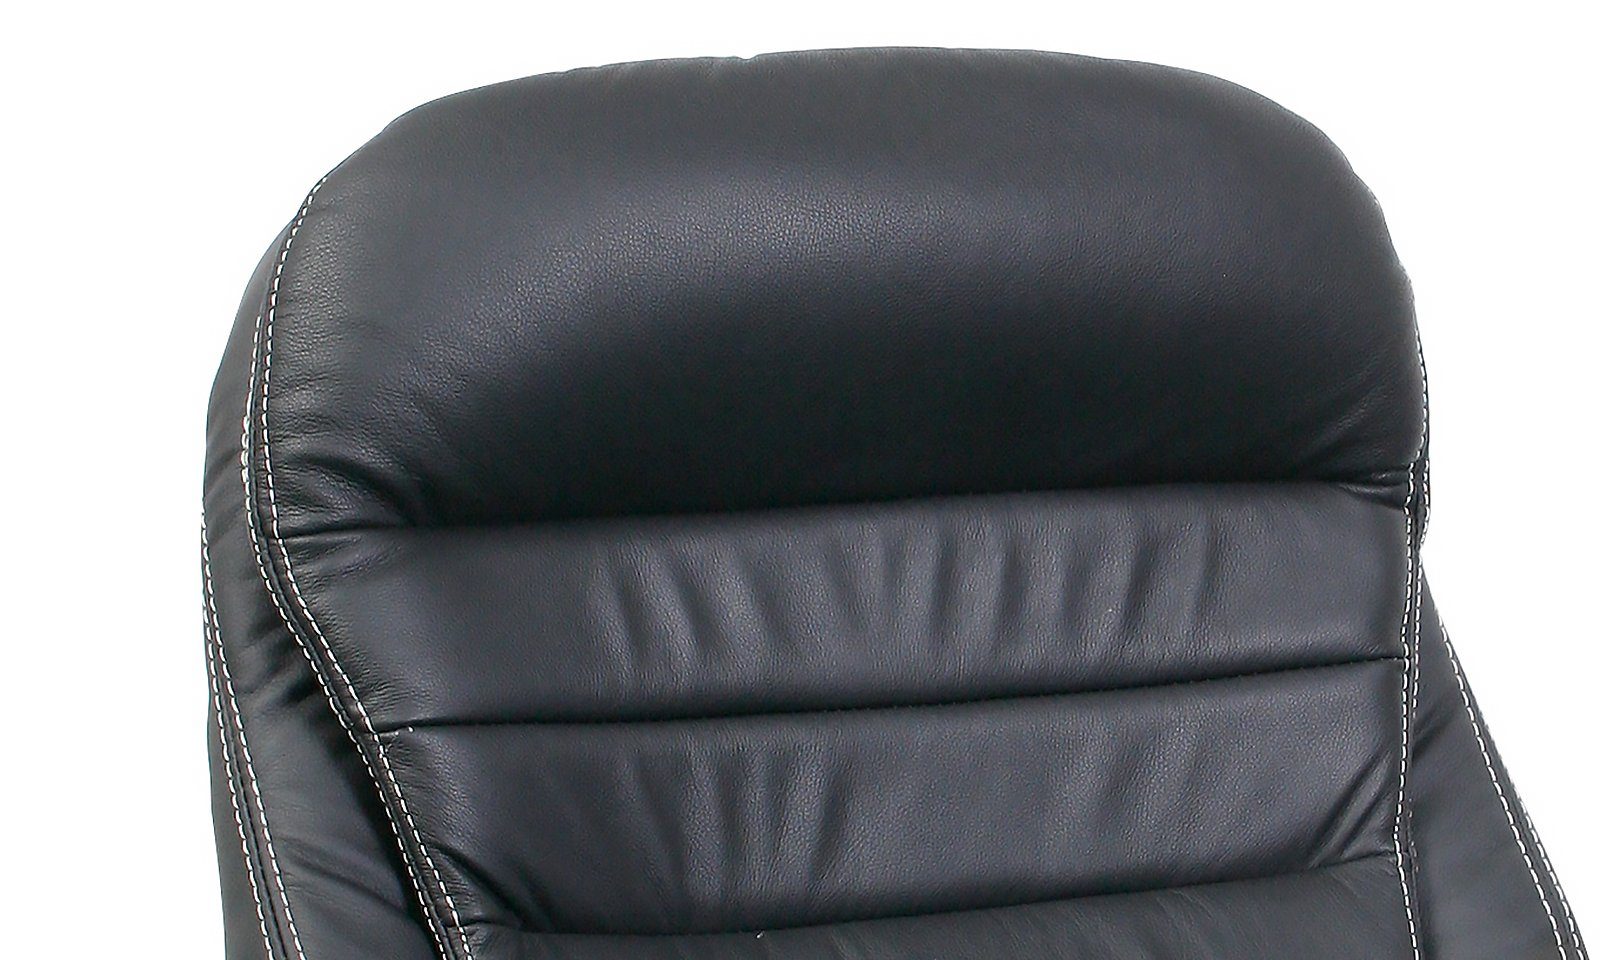 Jet-Line Chefsessel Büro Stuhl schwarz Konferenzstuhl Bergamo